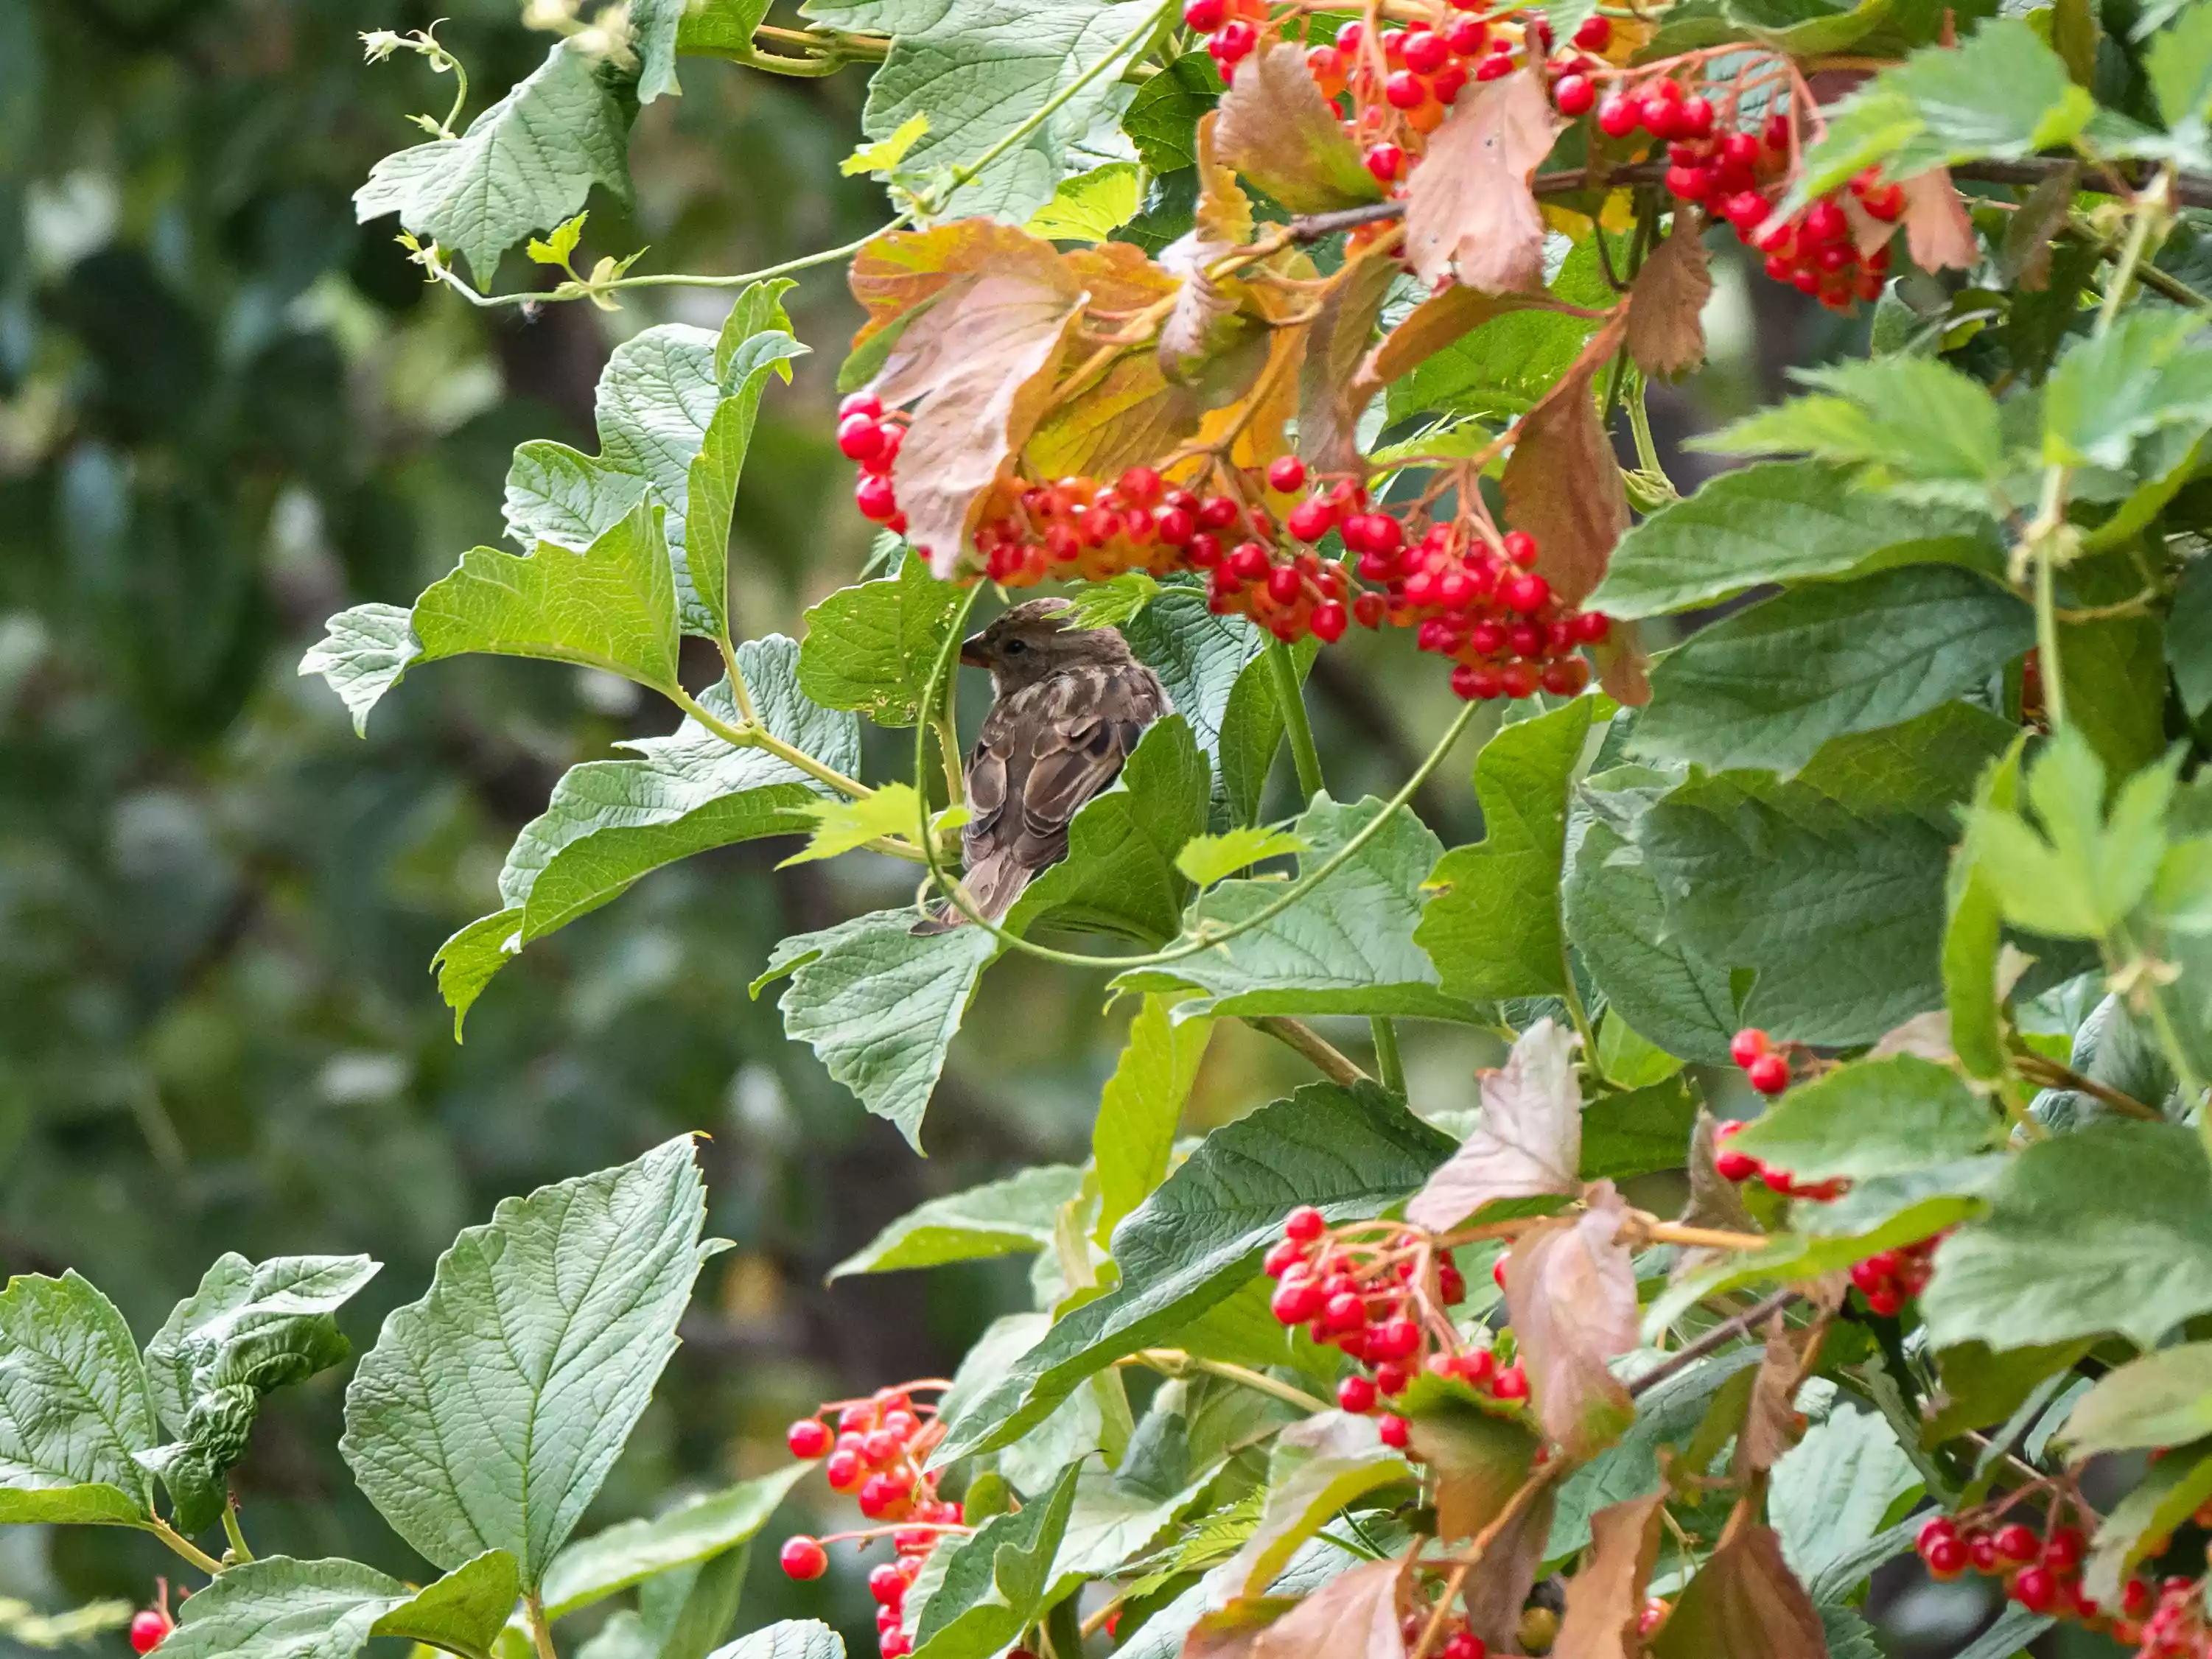 sparrow in a viburnum tree full of red berries